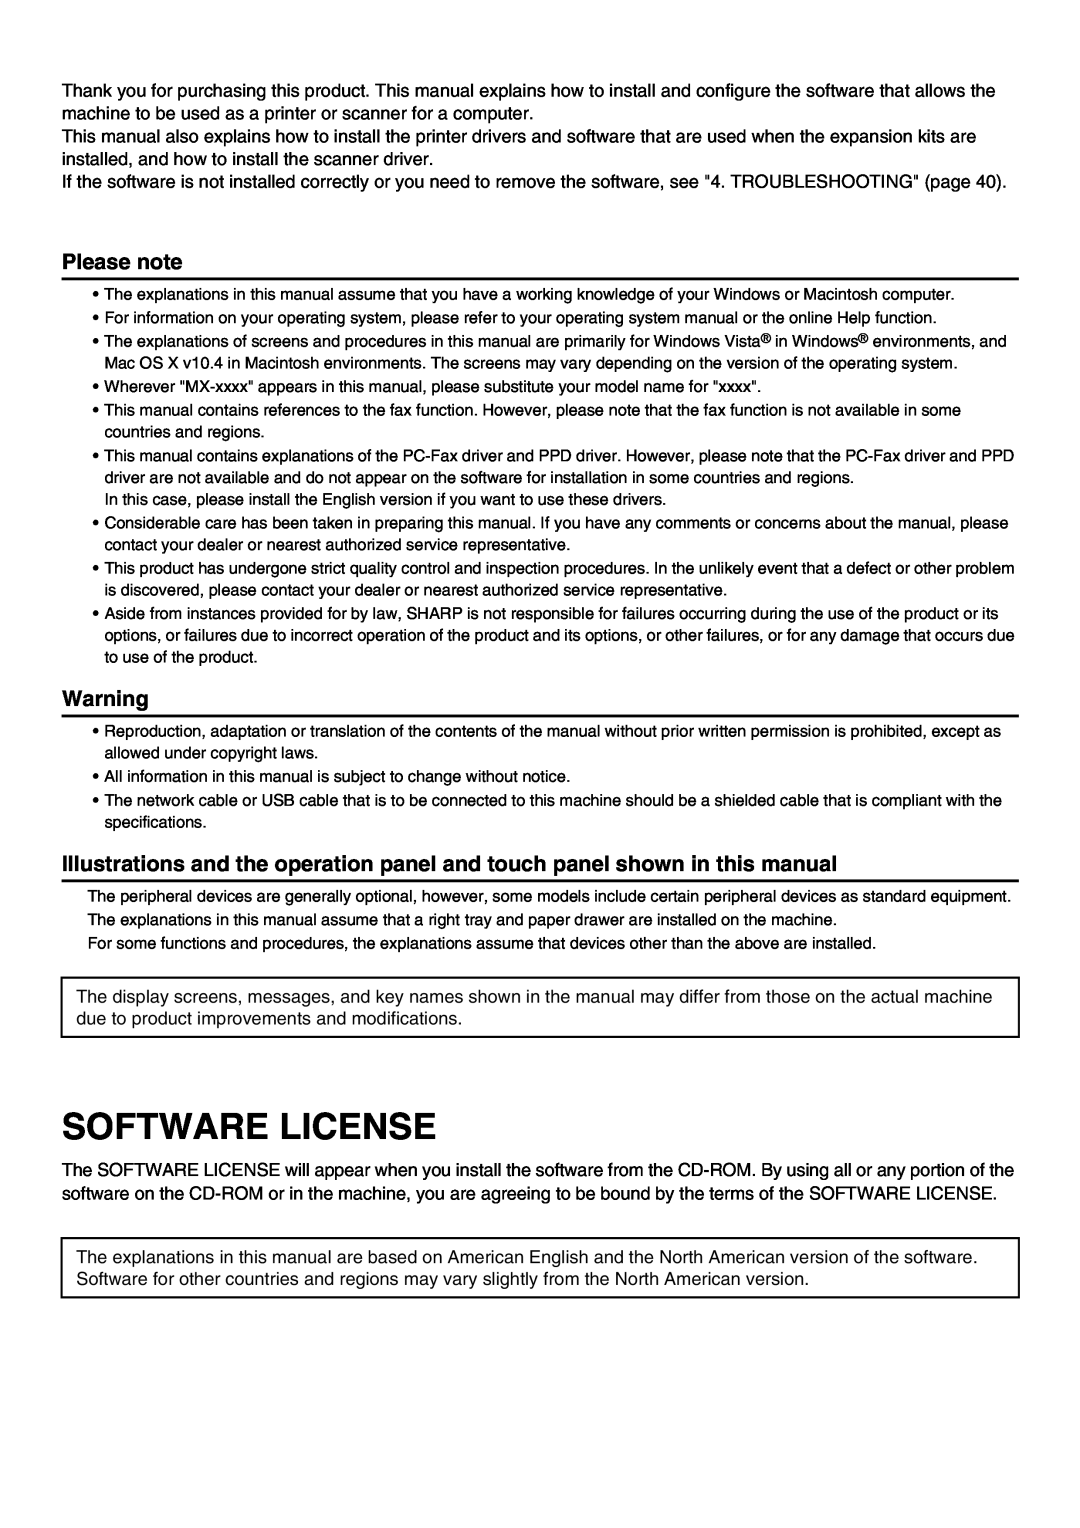 Sharp MX-2310U, MX-2010U setup guide Software License, Please note 